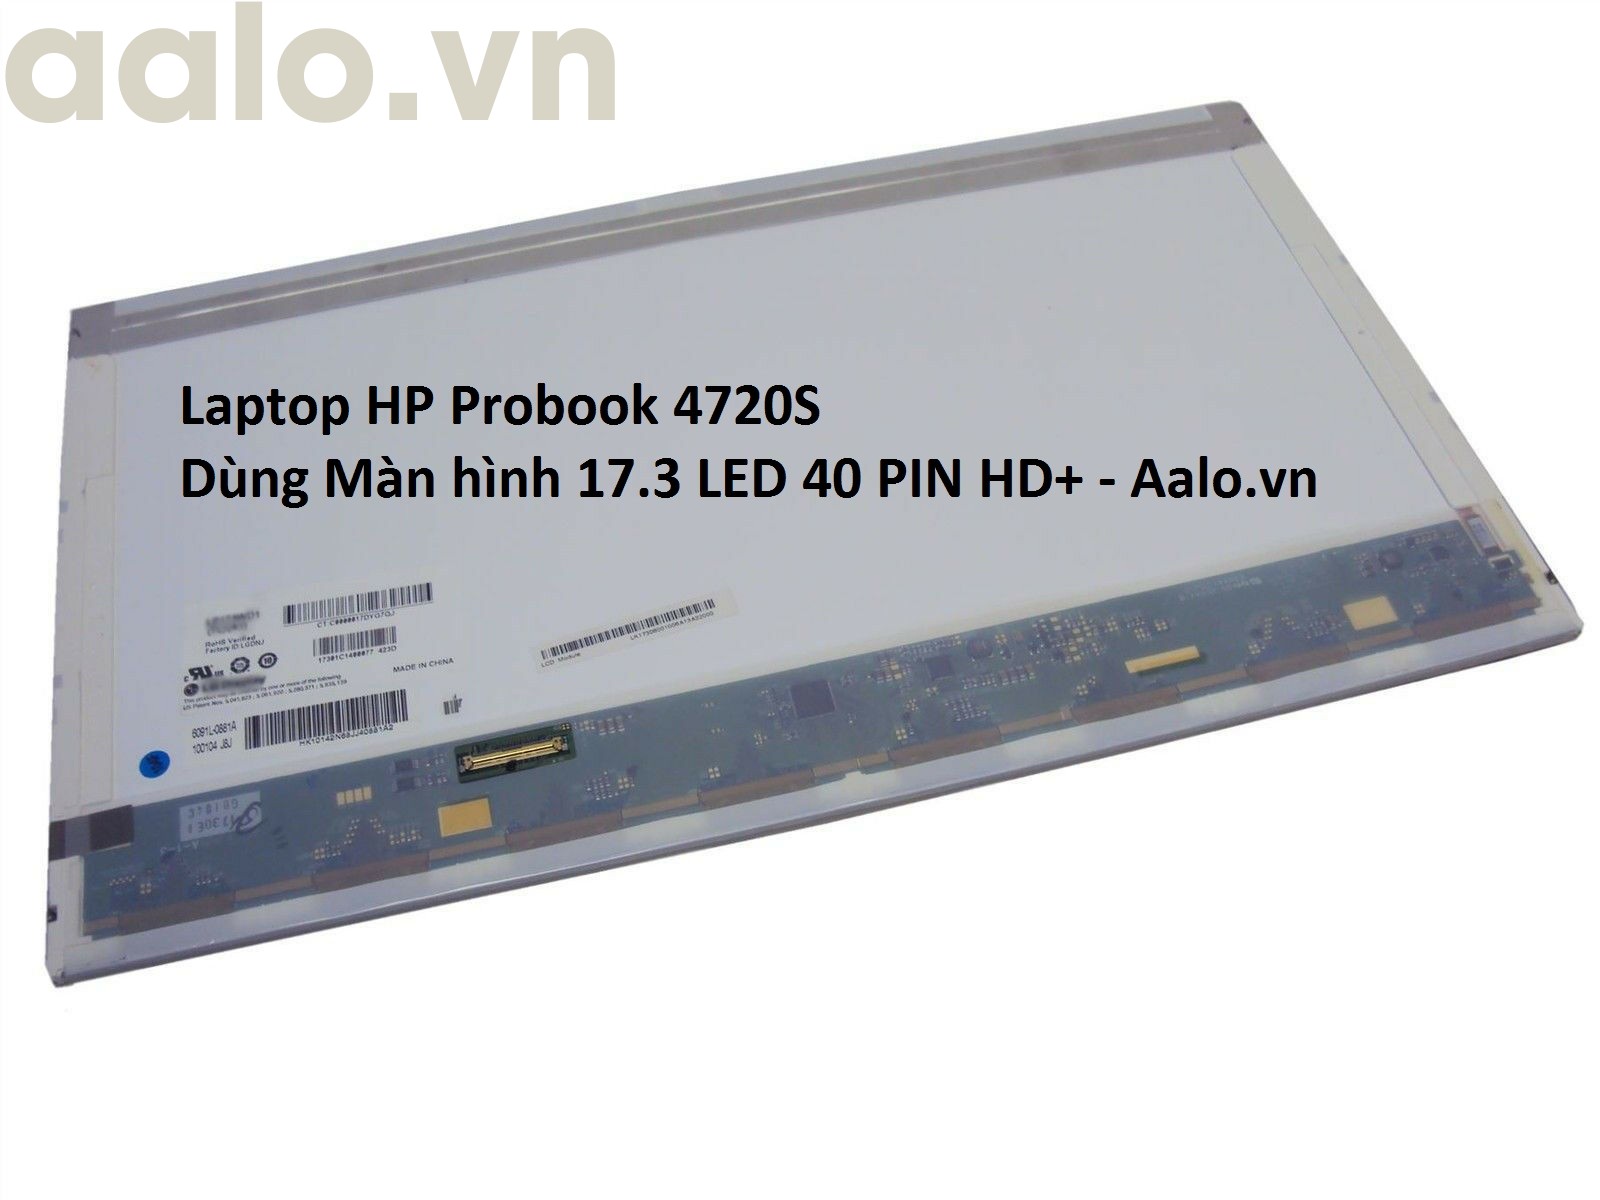 Màn hình Laptop HP Probook 4720S